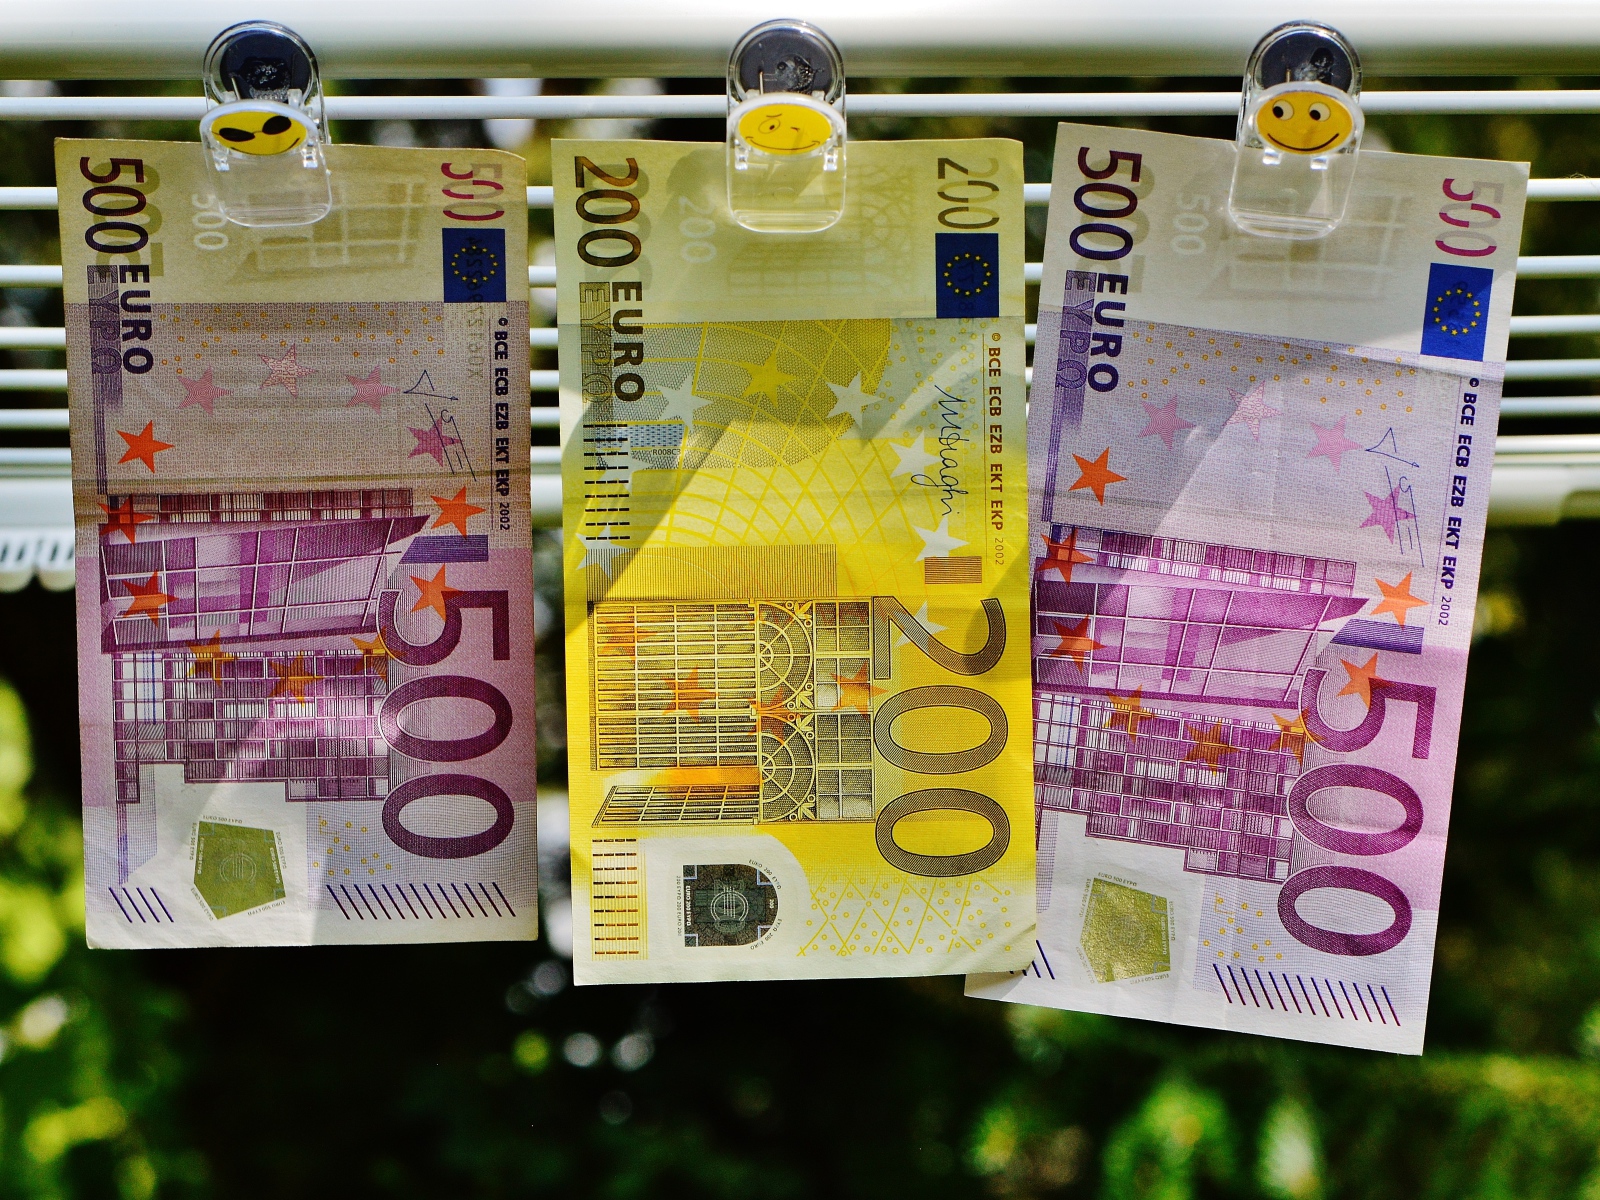 Euro bills hang on a rope